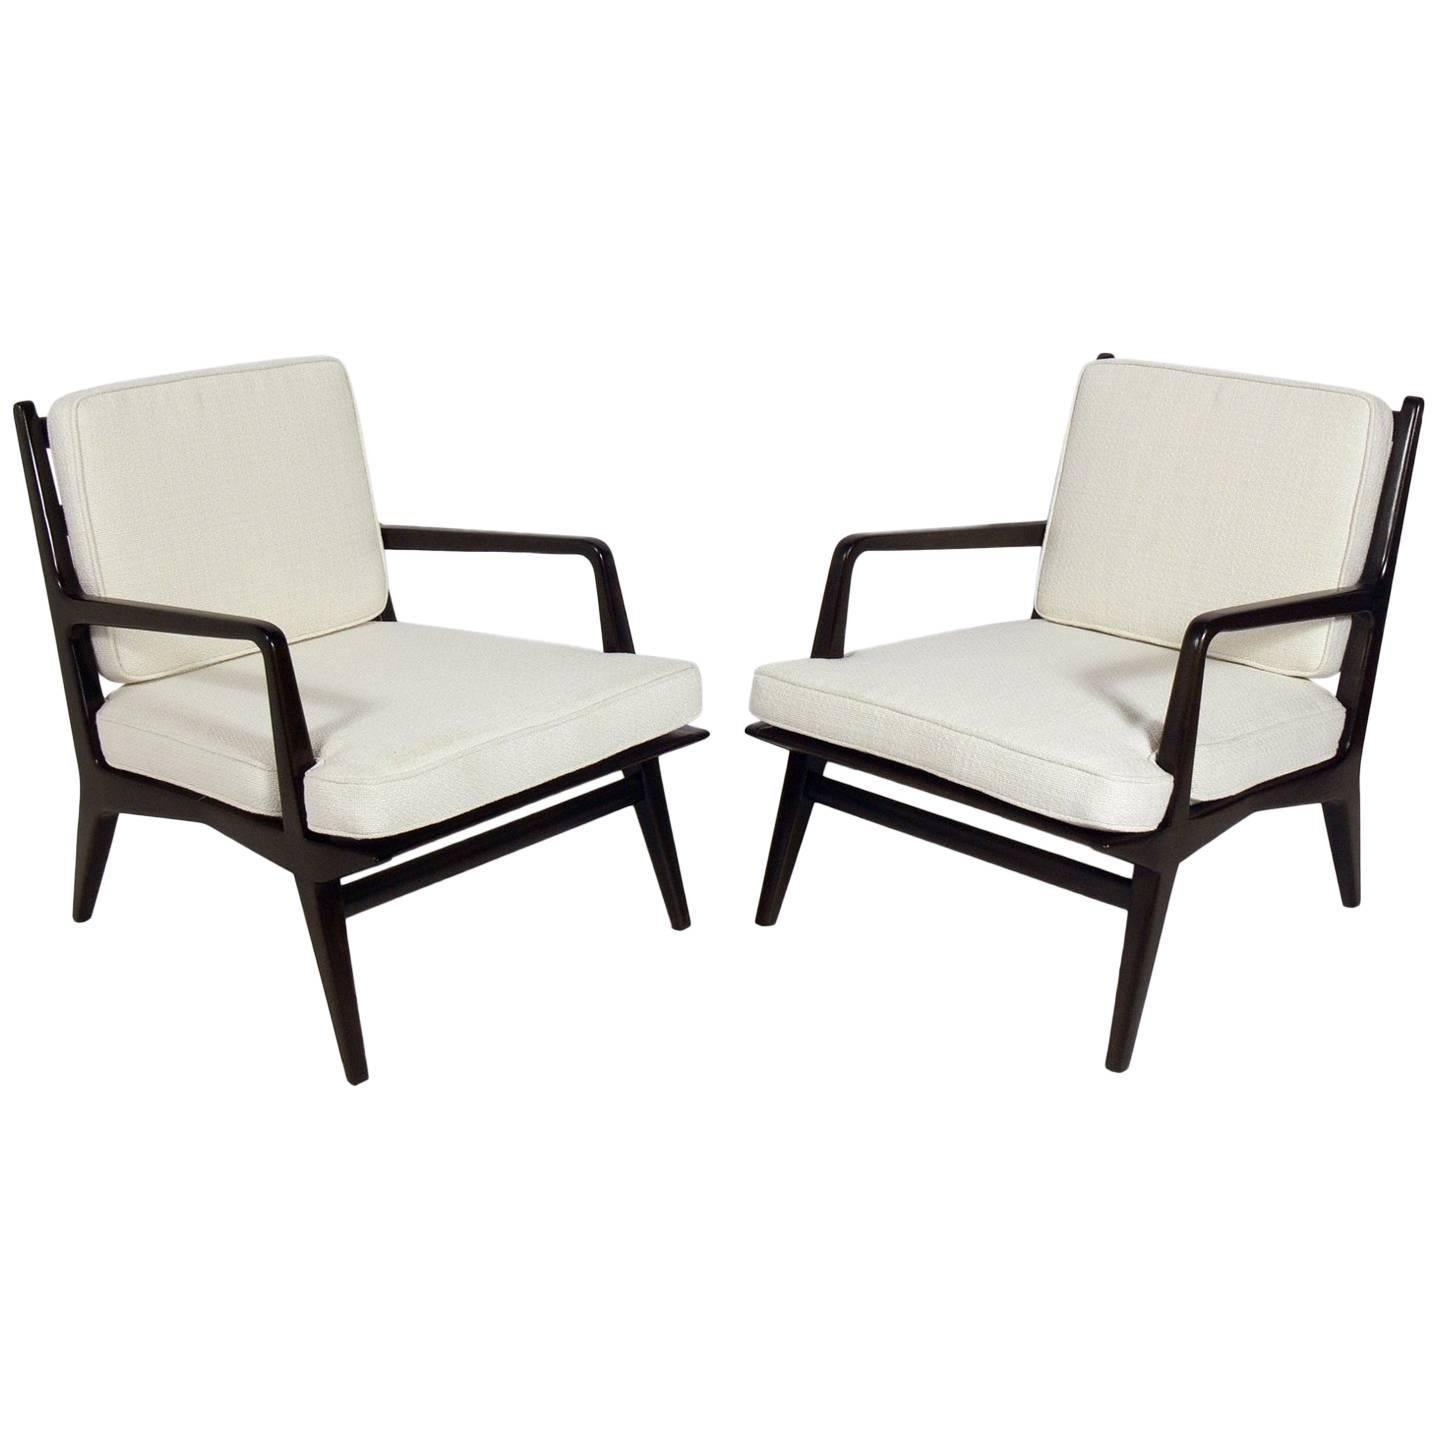 Pair of Lounge Chairs by Carlo di Carli